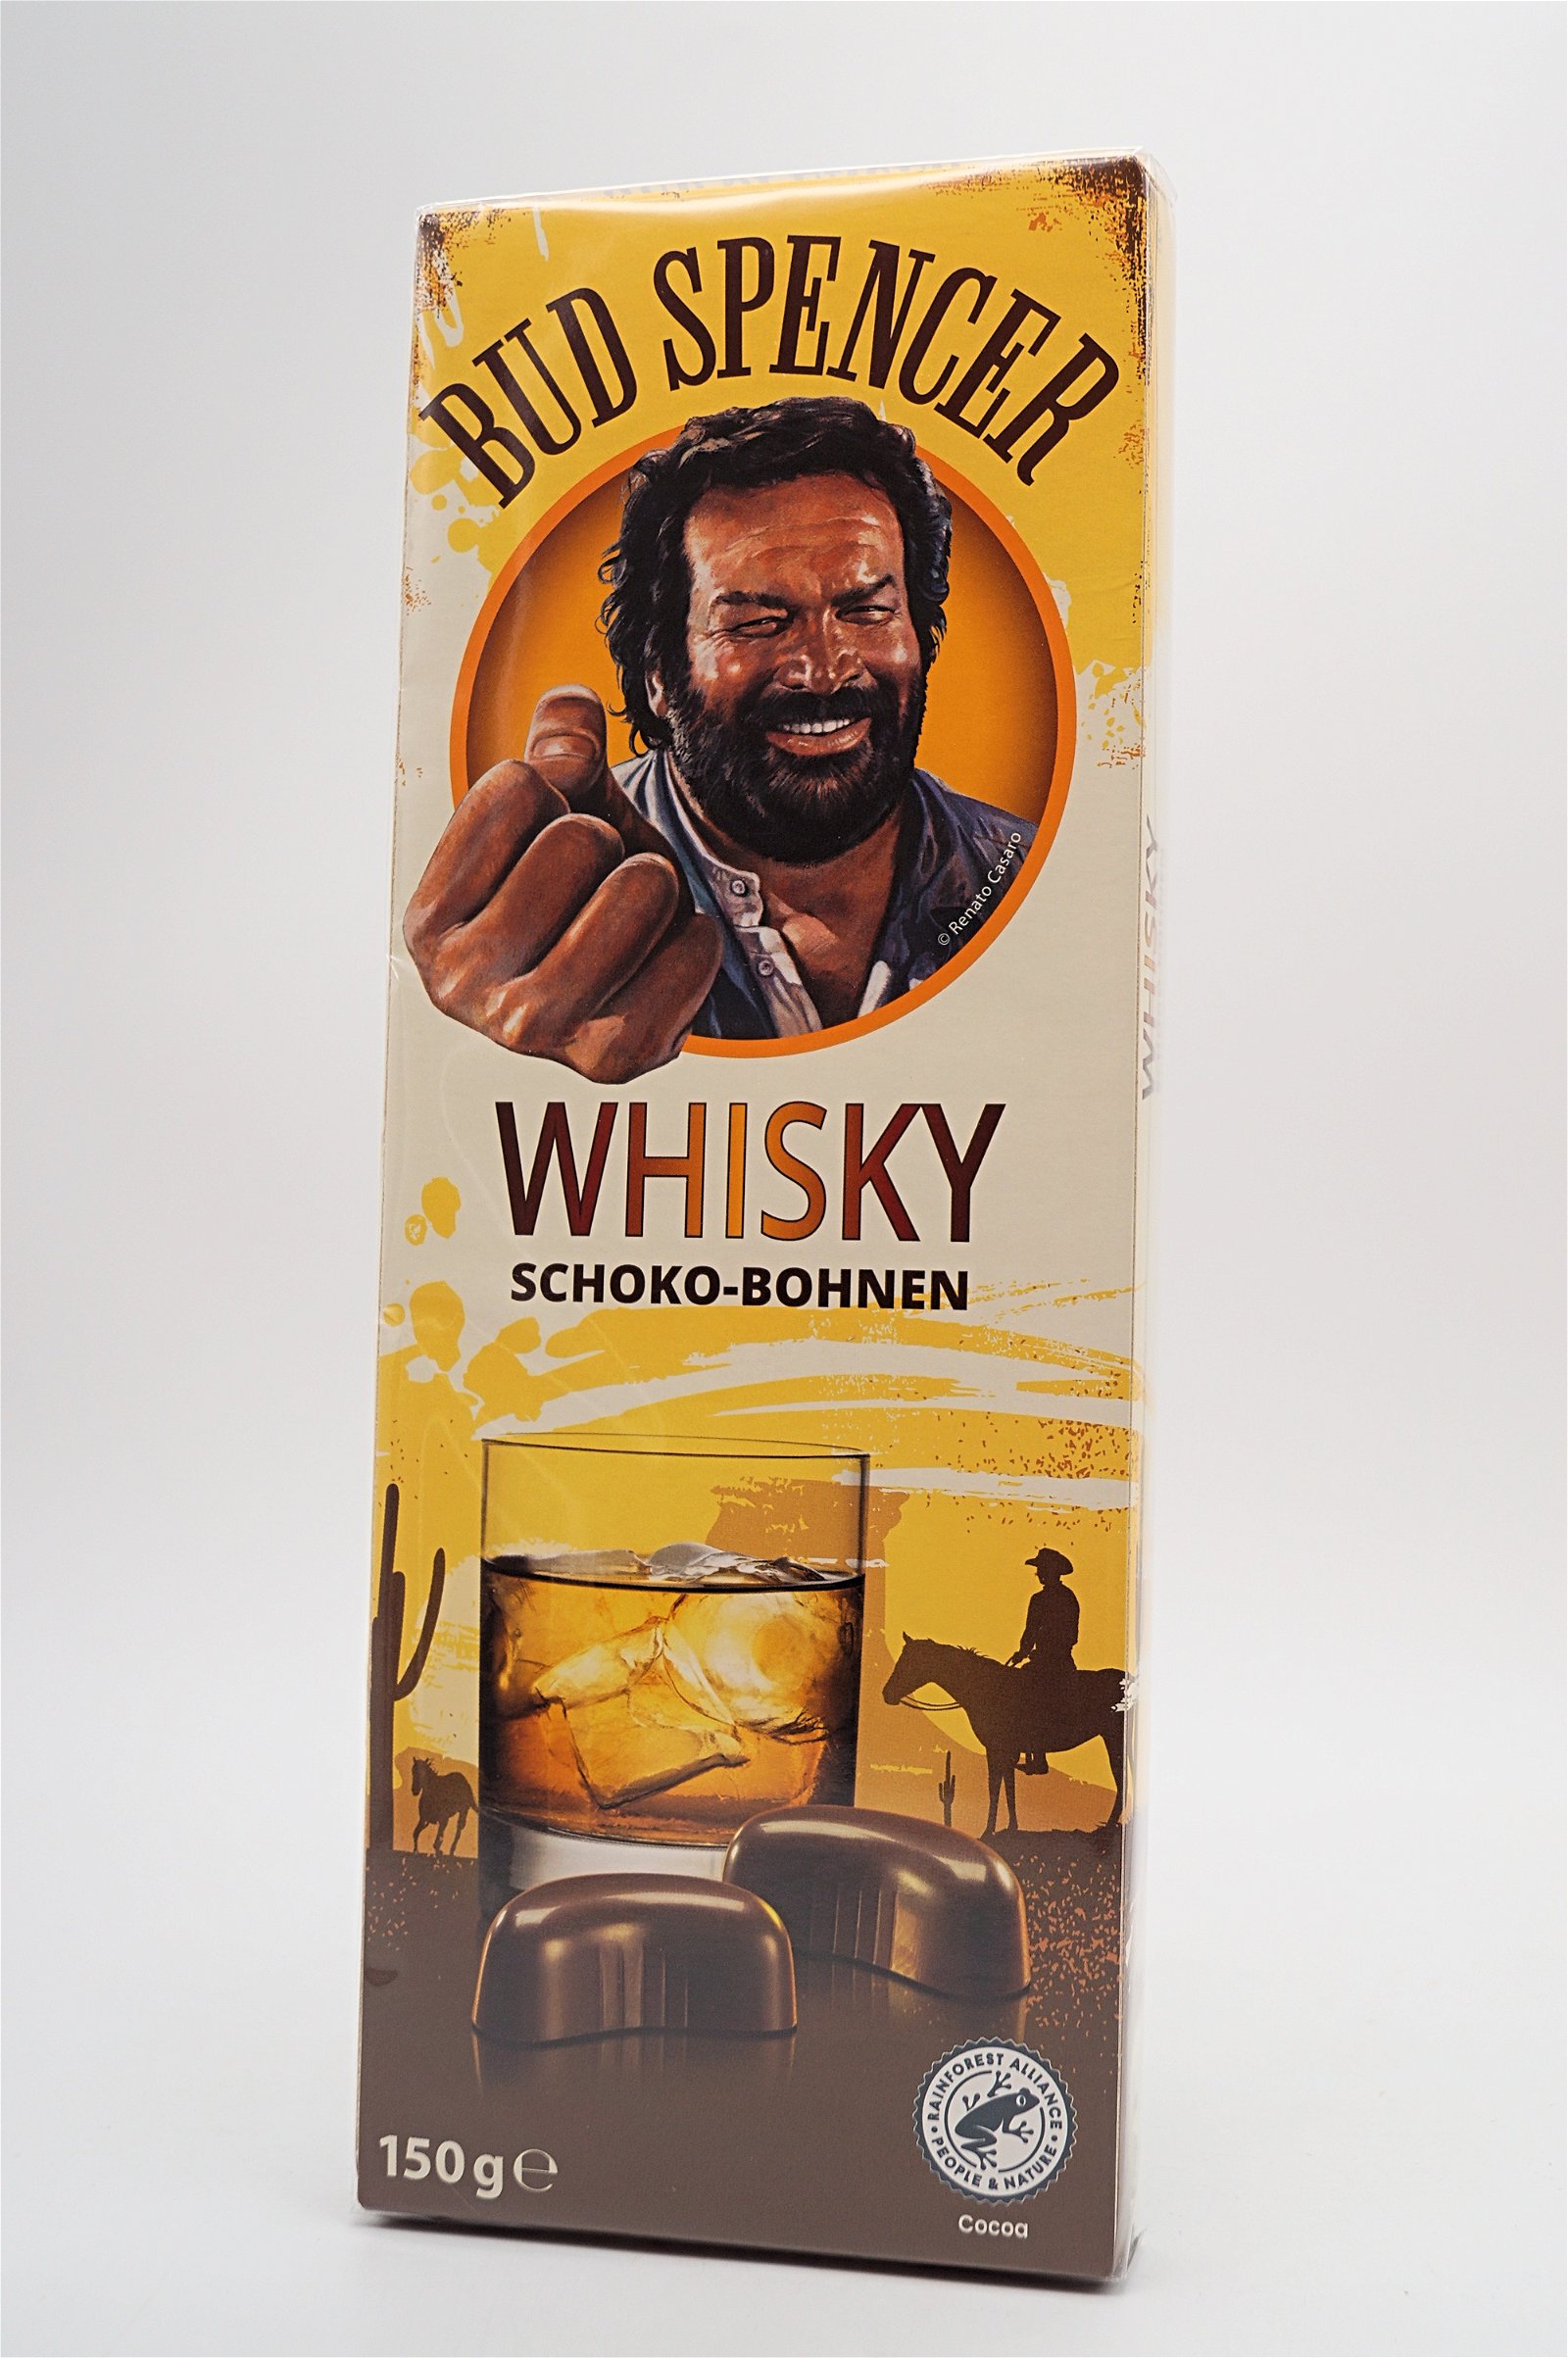 Bud Spencer Whisky Schoko Bohnen